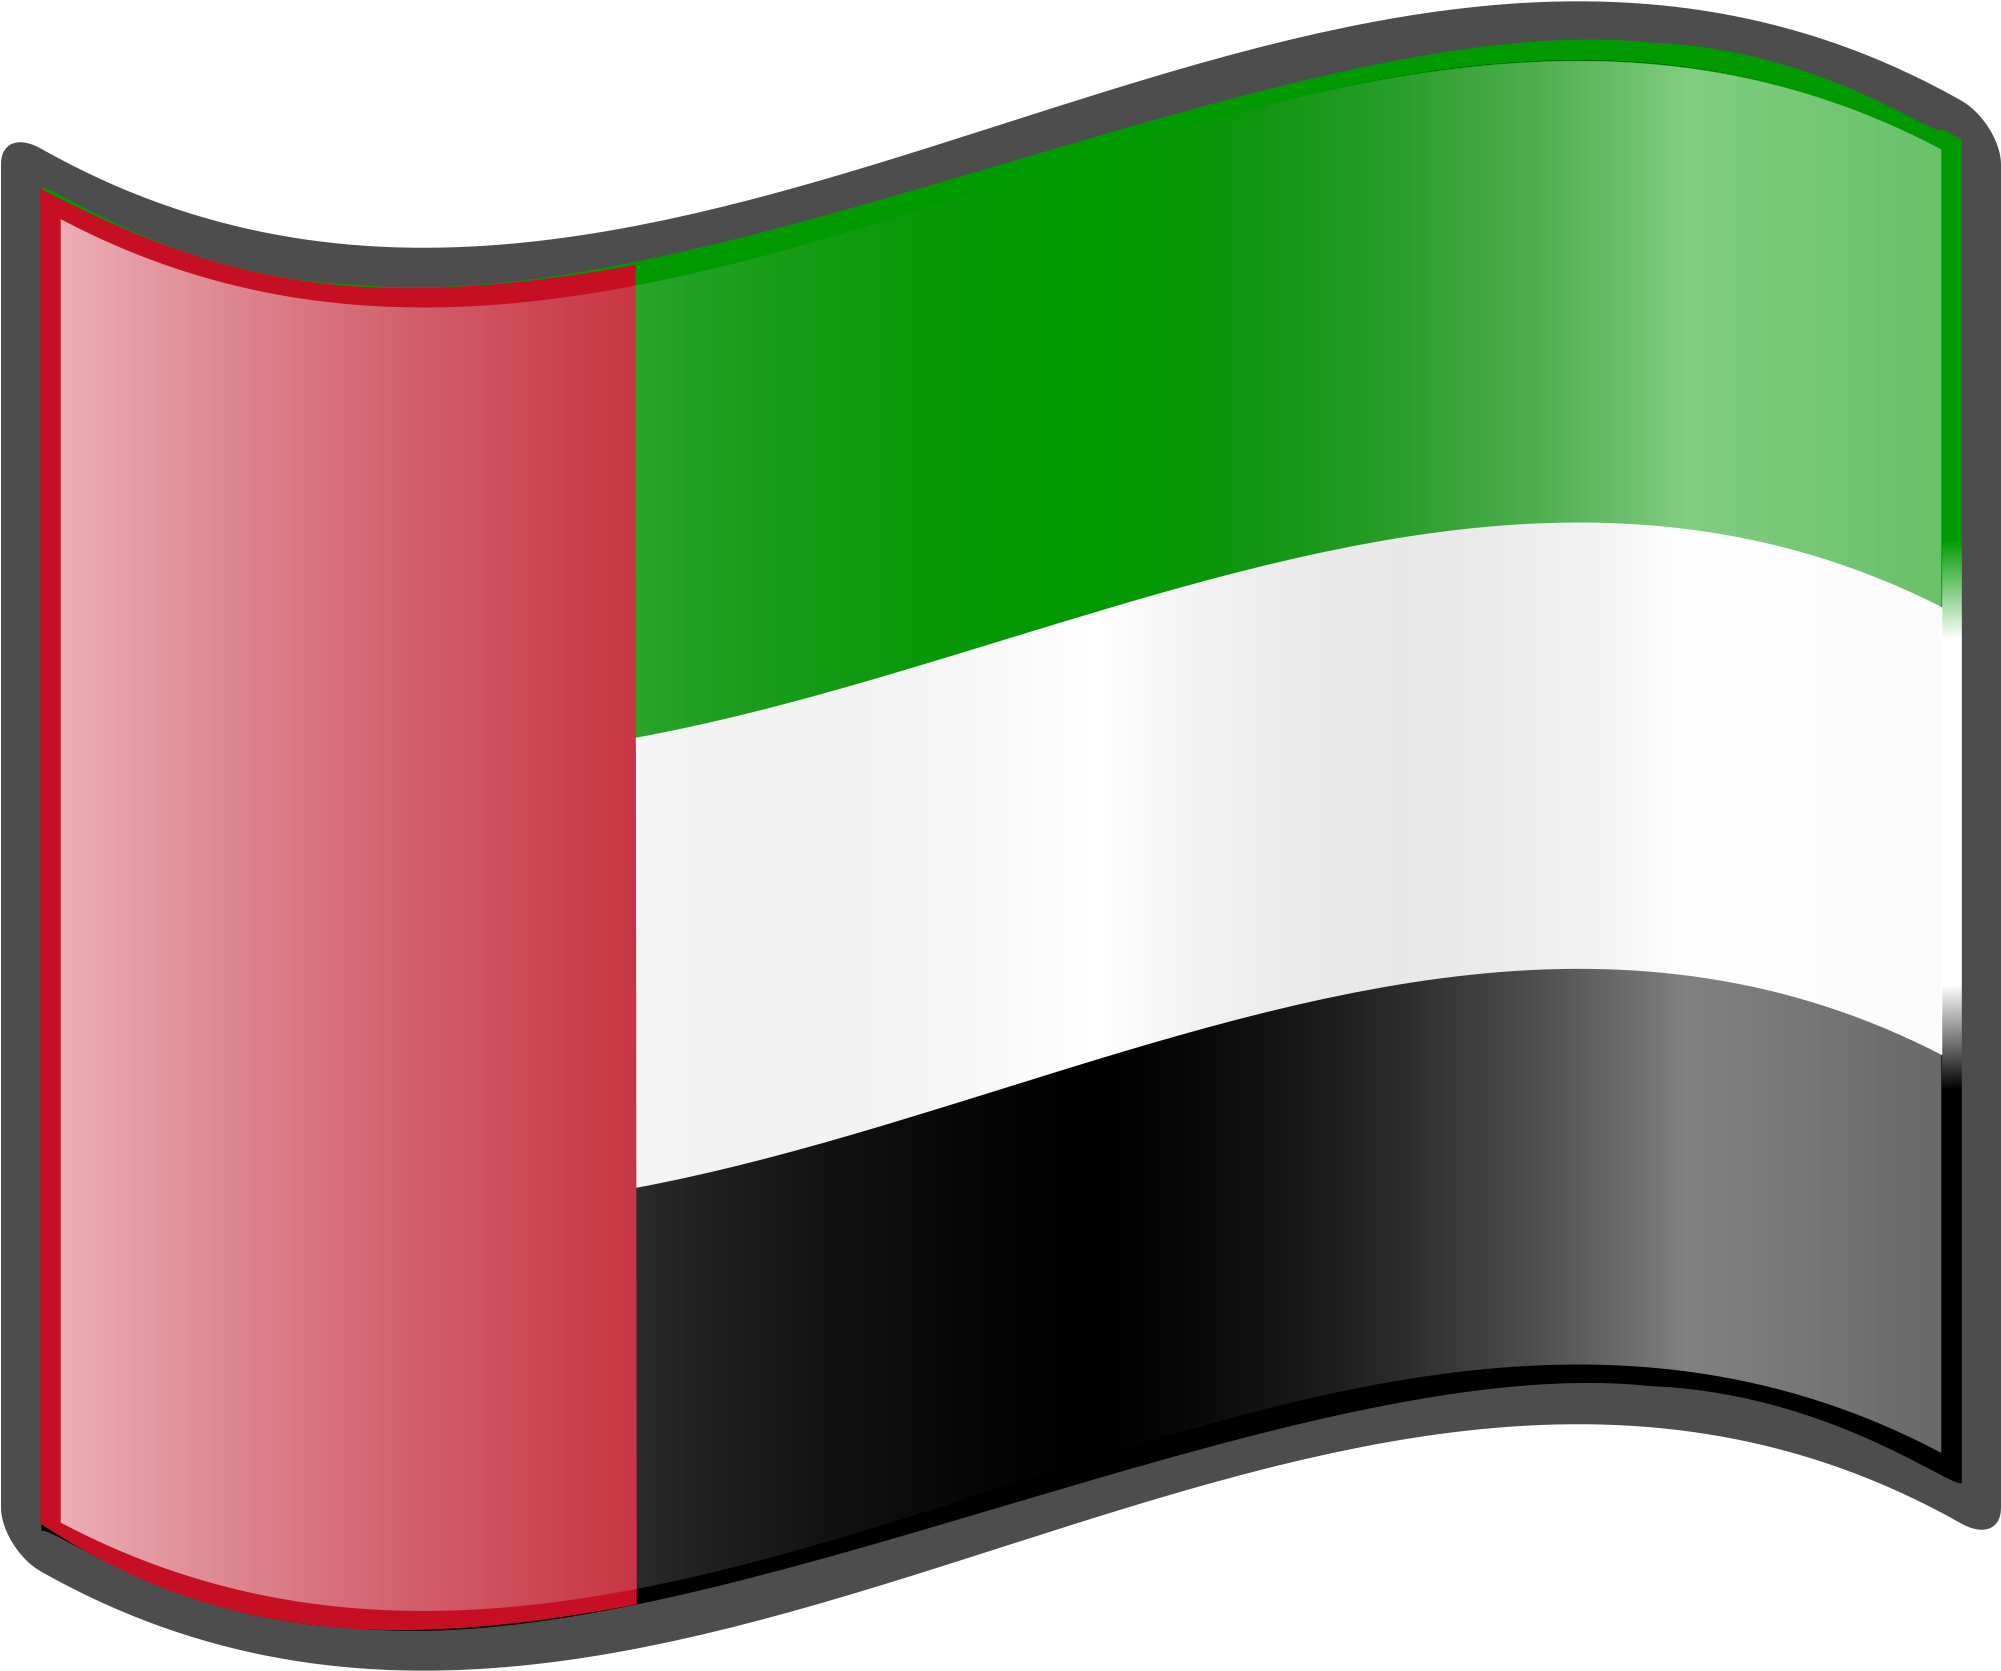 Abu Dhabi Flag Background PNG Image